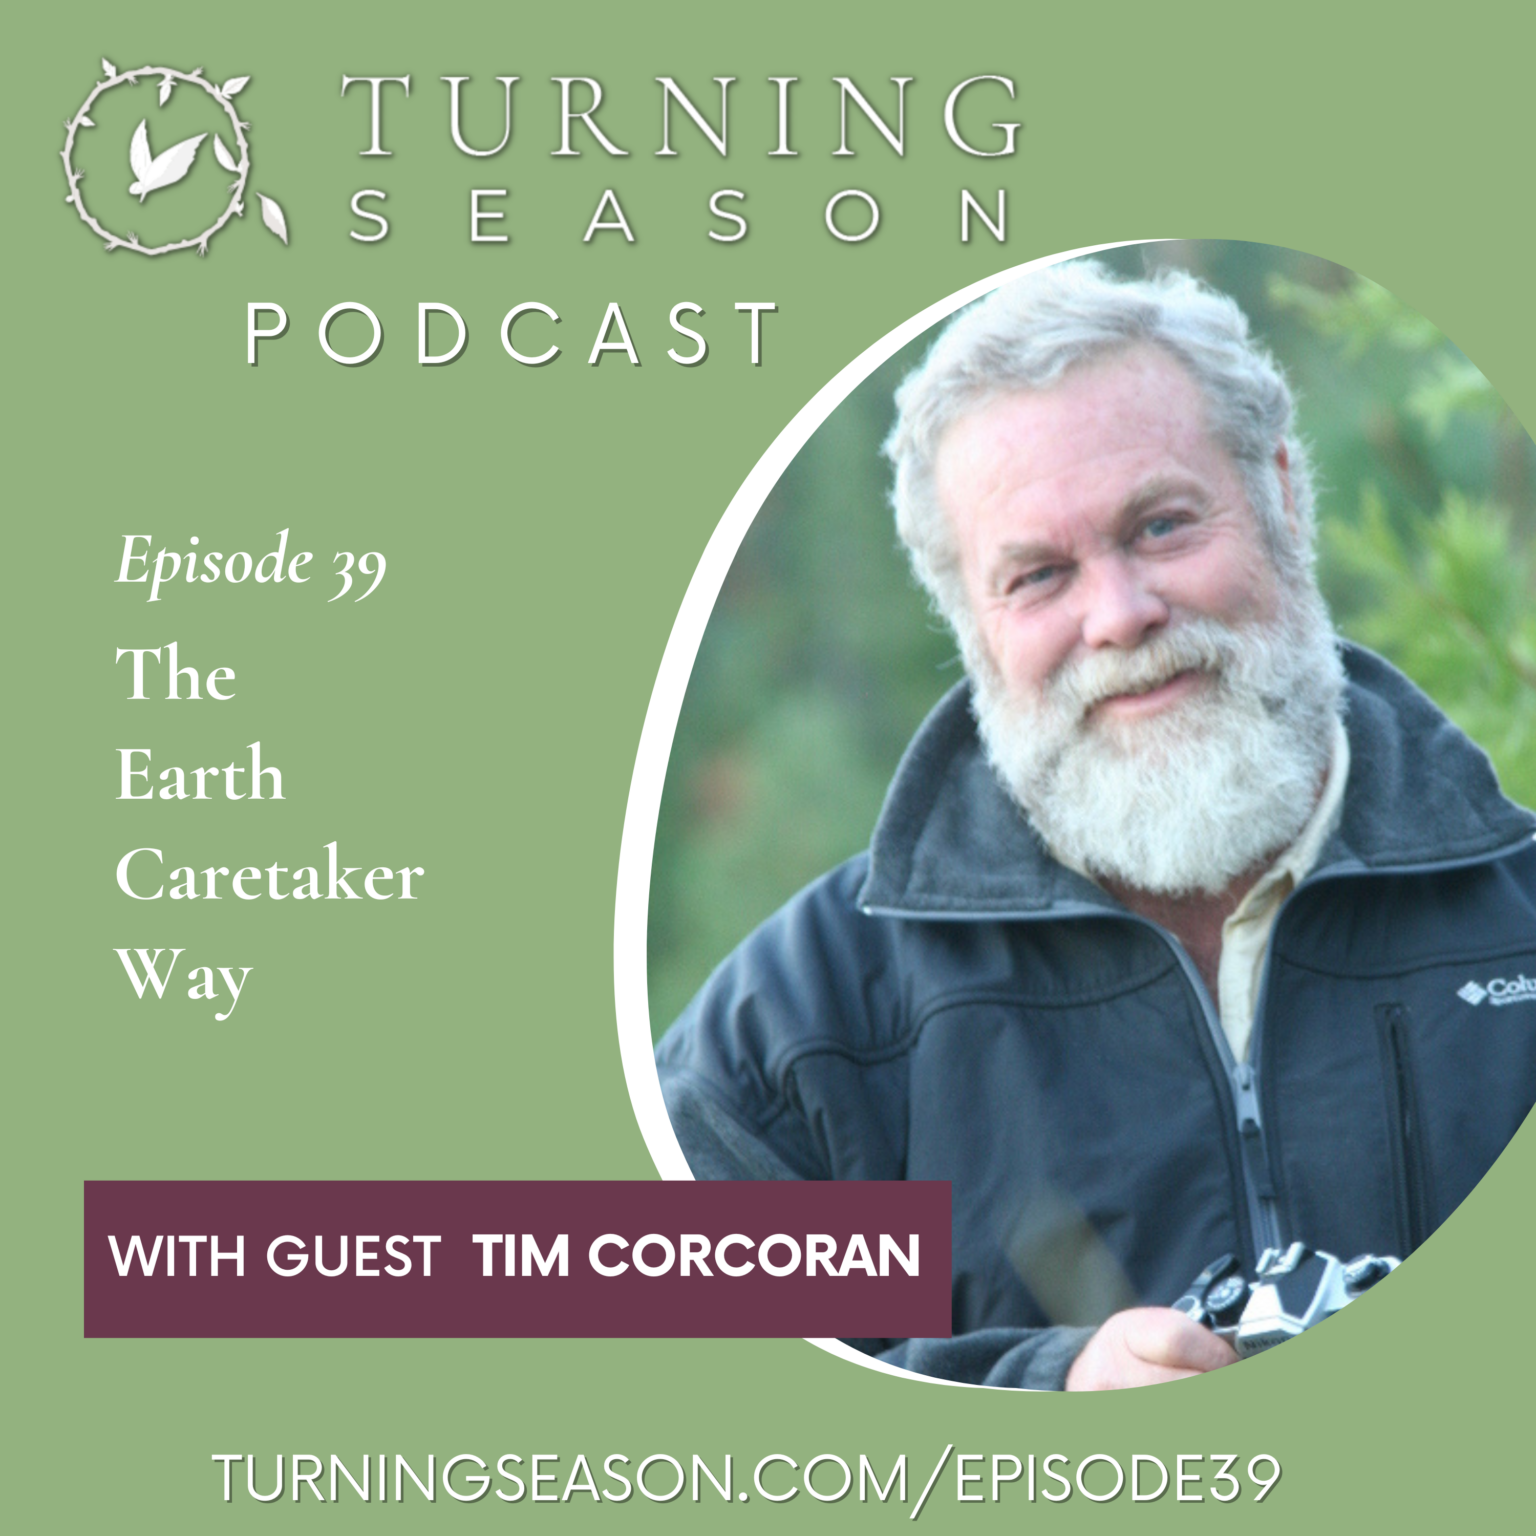 Turning Season Podcast Episode 39 with Tim Corcoran hosted by Leilani Navar turningseason.com